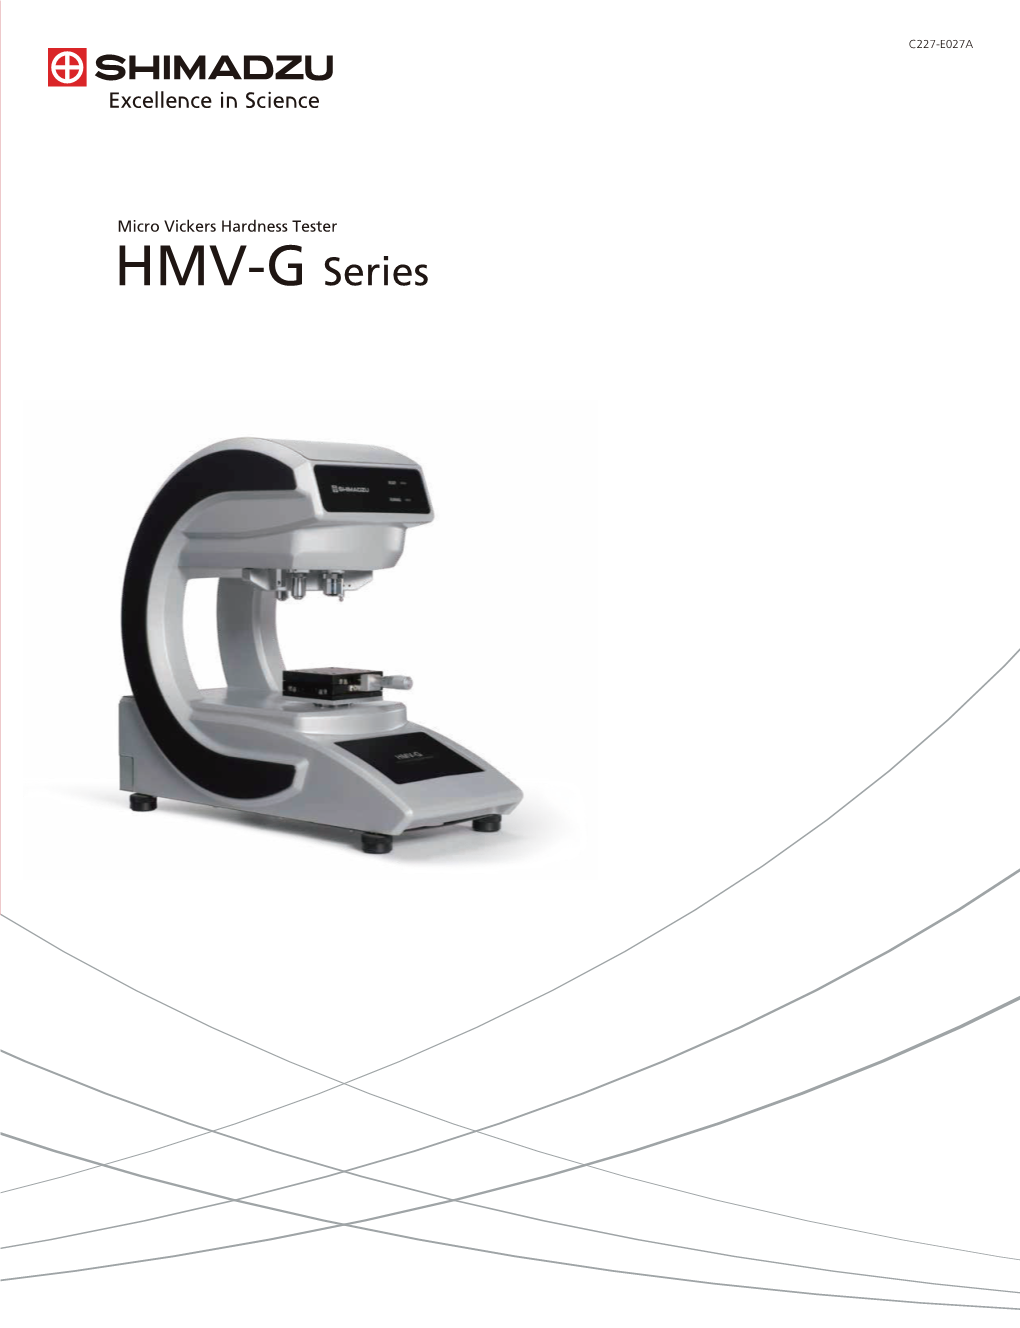 HMV-G Series Micro Vickers Hardness Tester Brochure